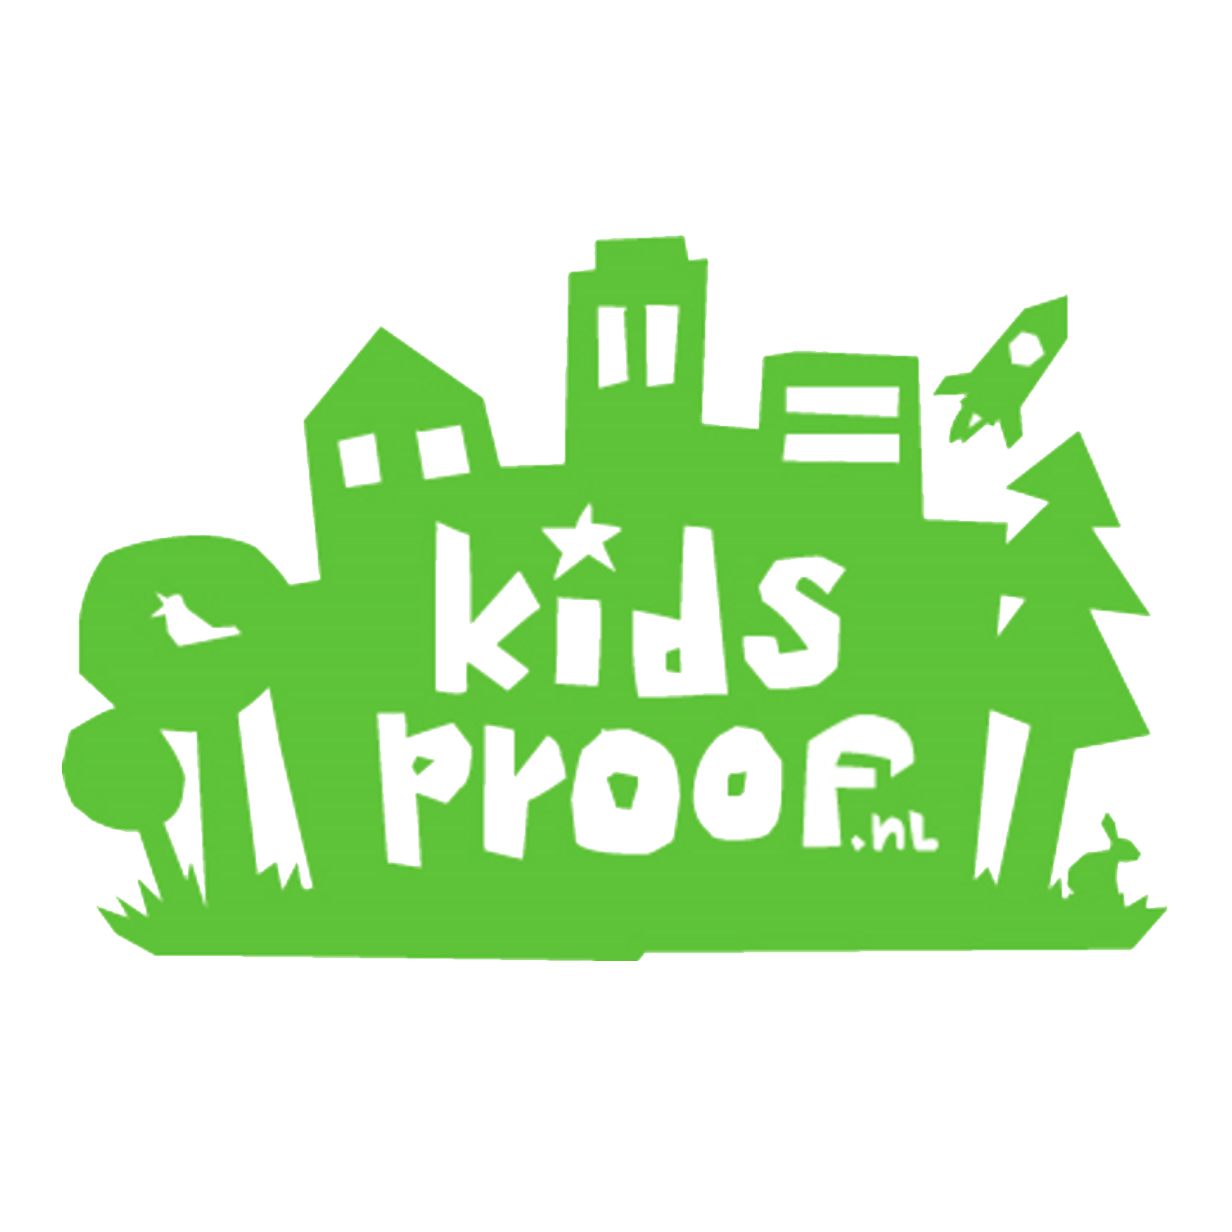 logo van Kidsproof